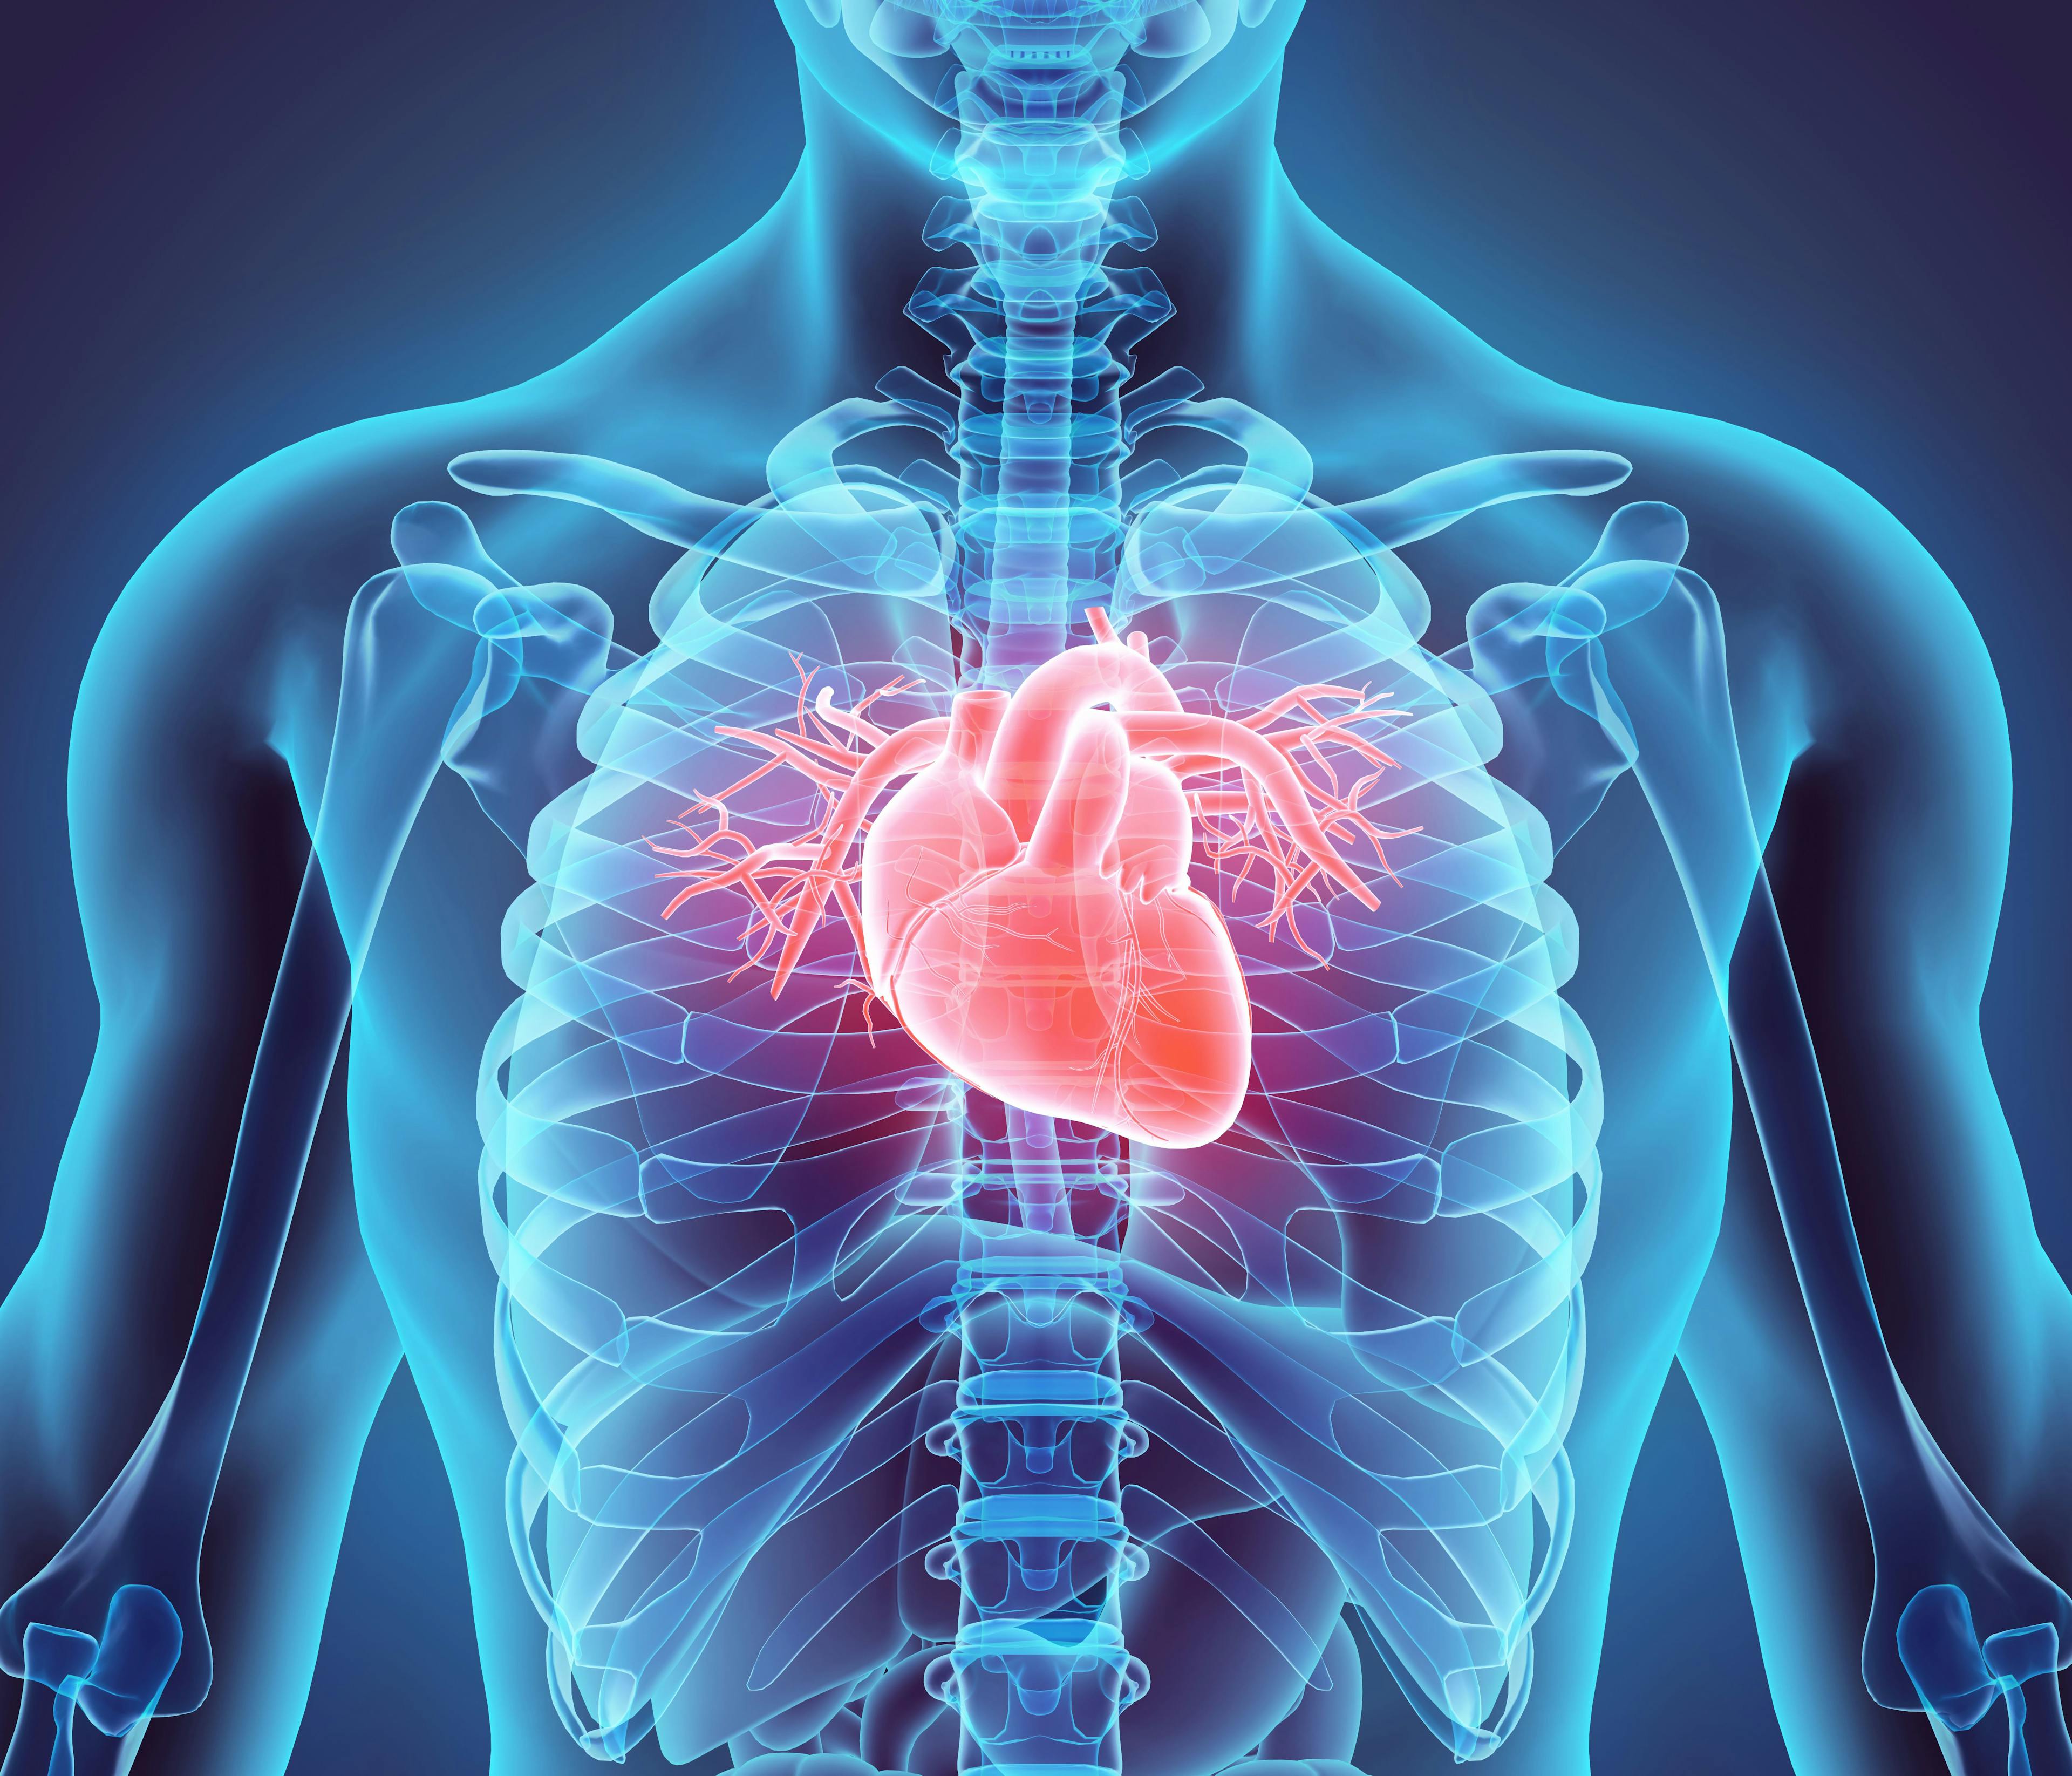 3D illustration of heart | Image Credit: yodiyim - stock.adobe.com